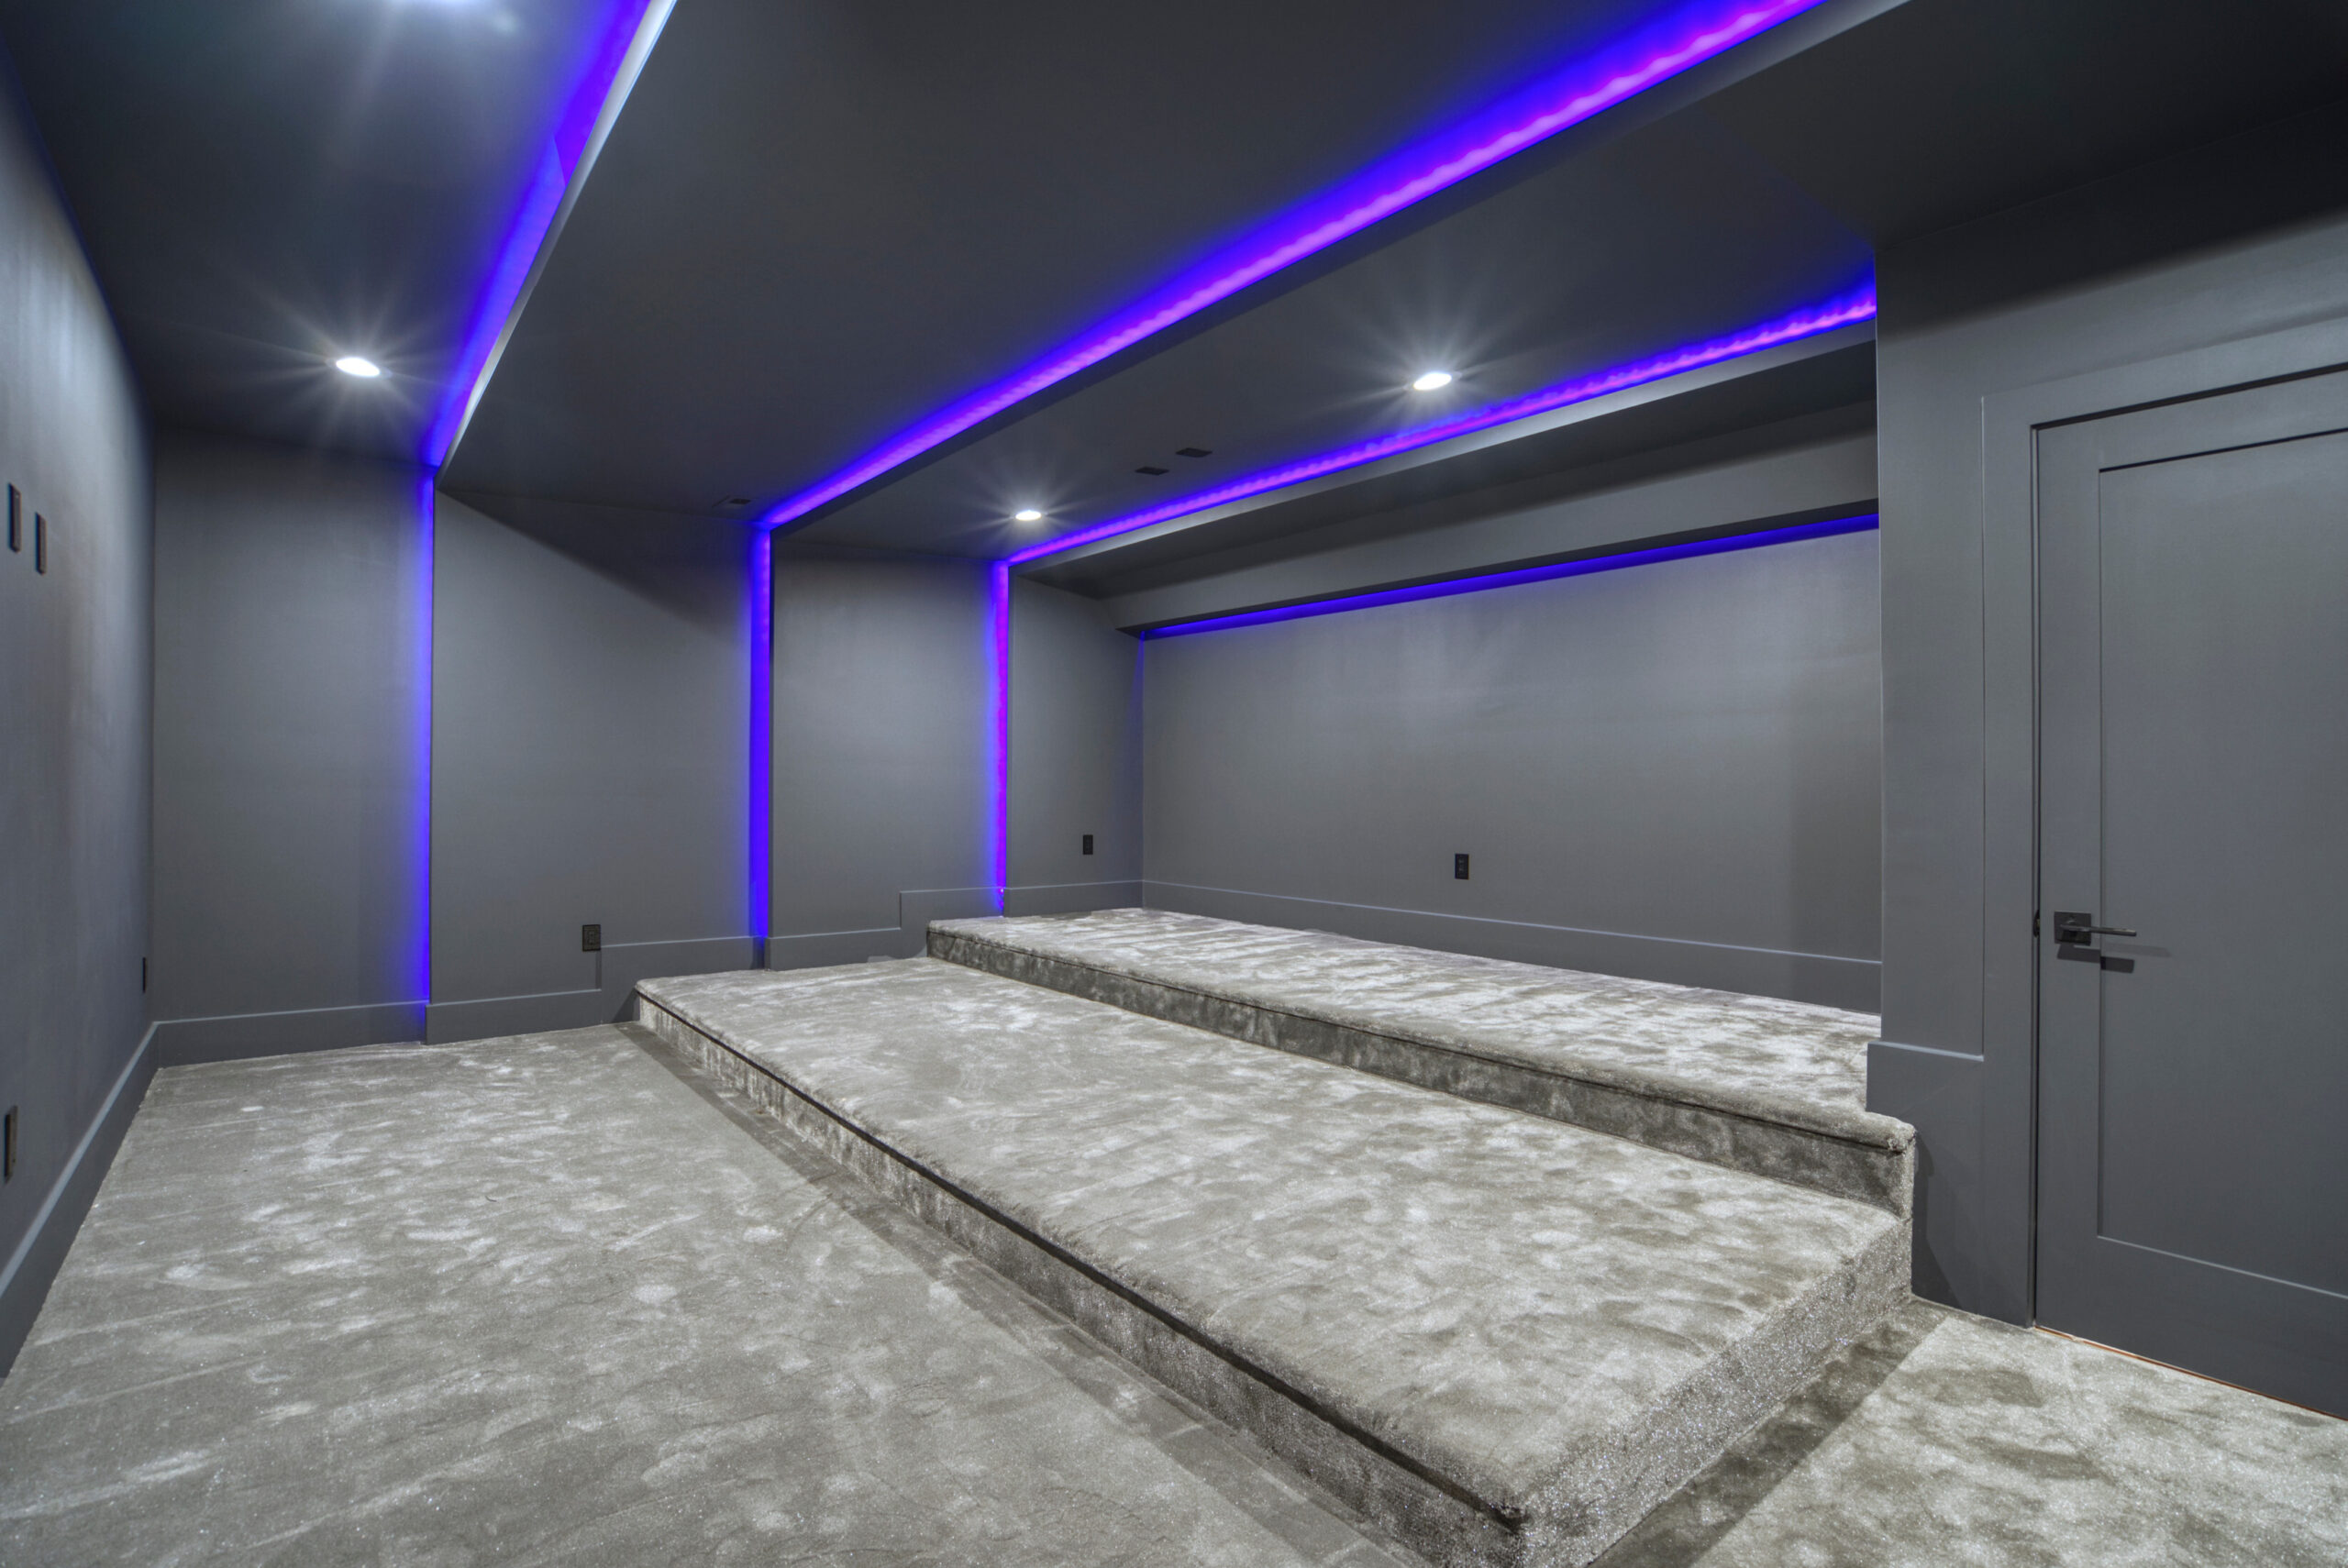 cinema/media room with 3 levels and LED purple lighting